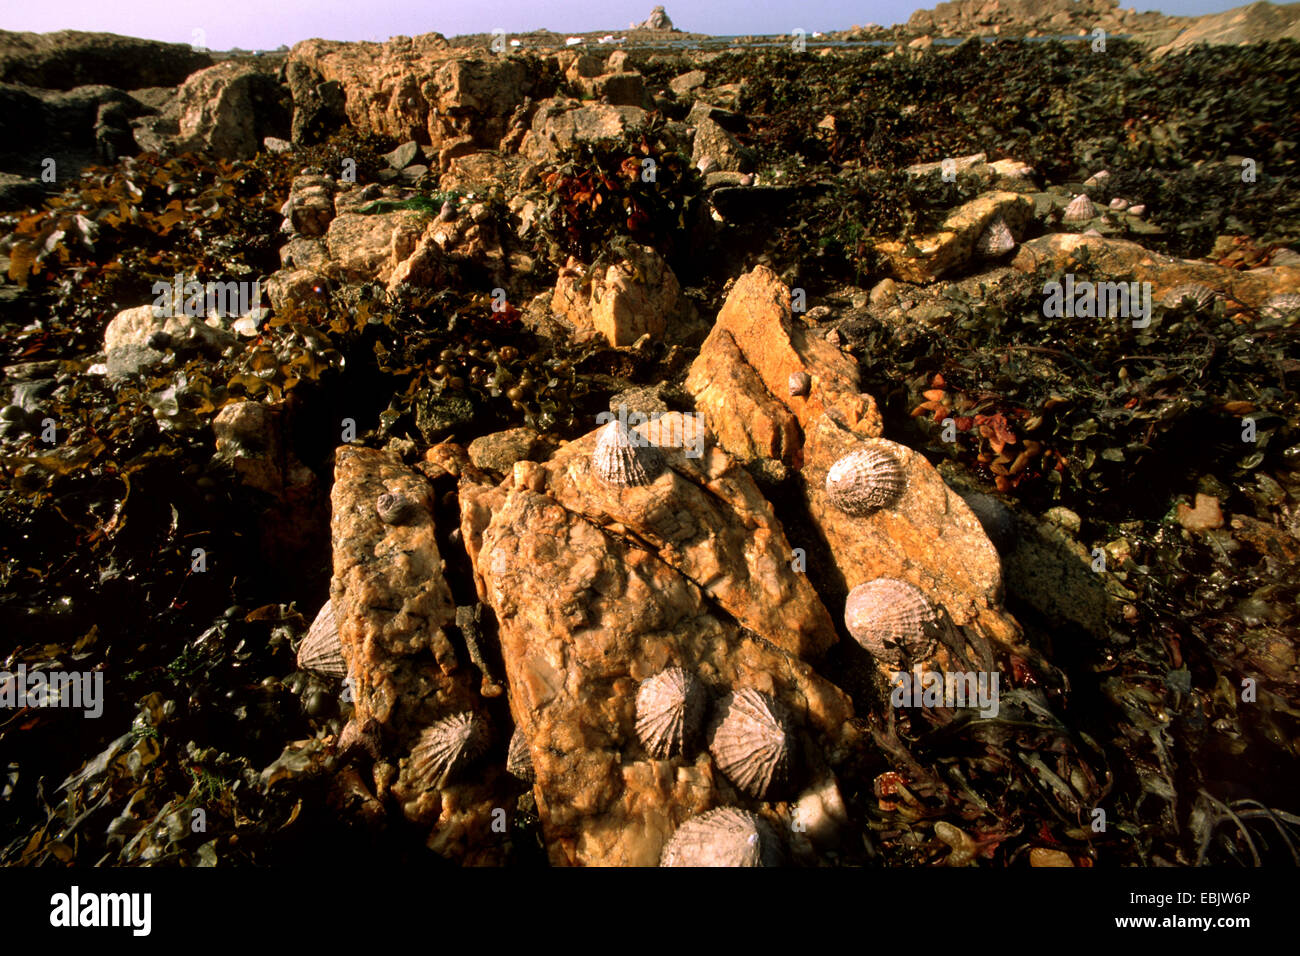 common limpet, common European limpet (Patella vulgata), on coastal rocks at low tide, Germany Stock Photo